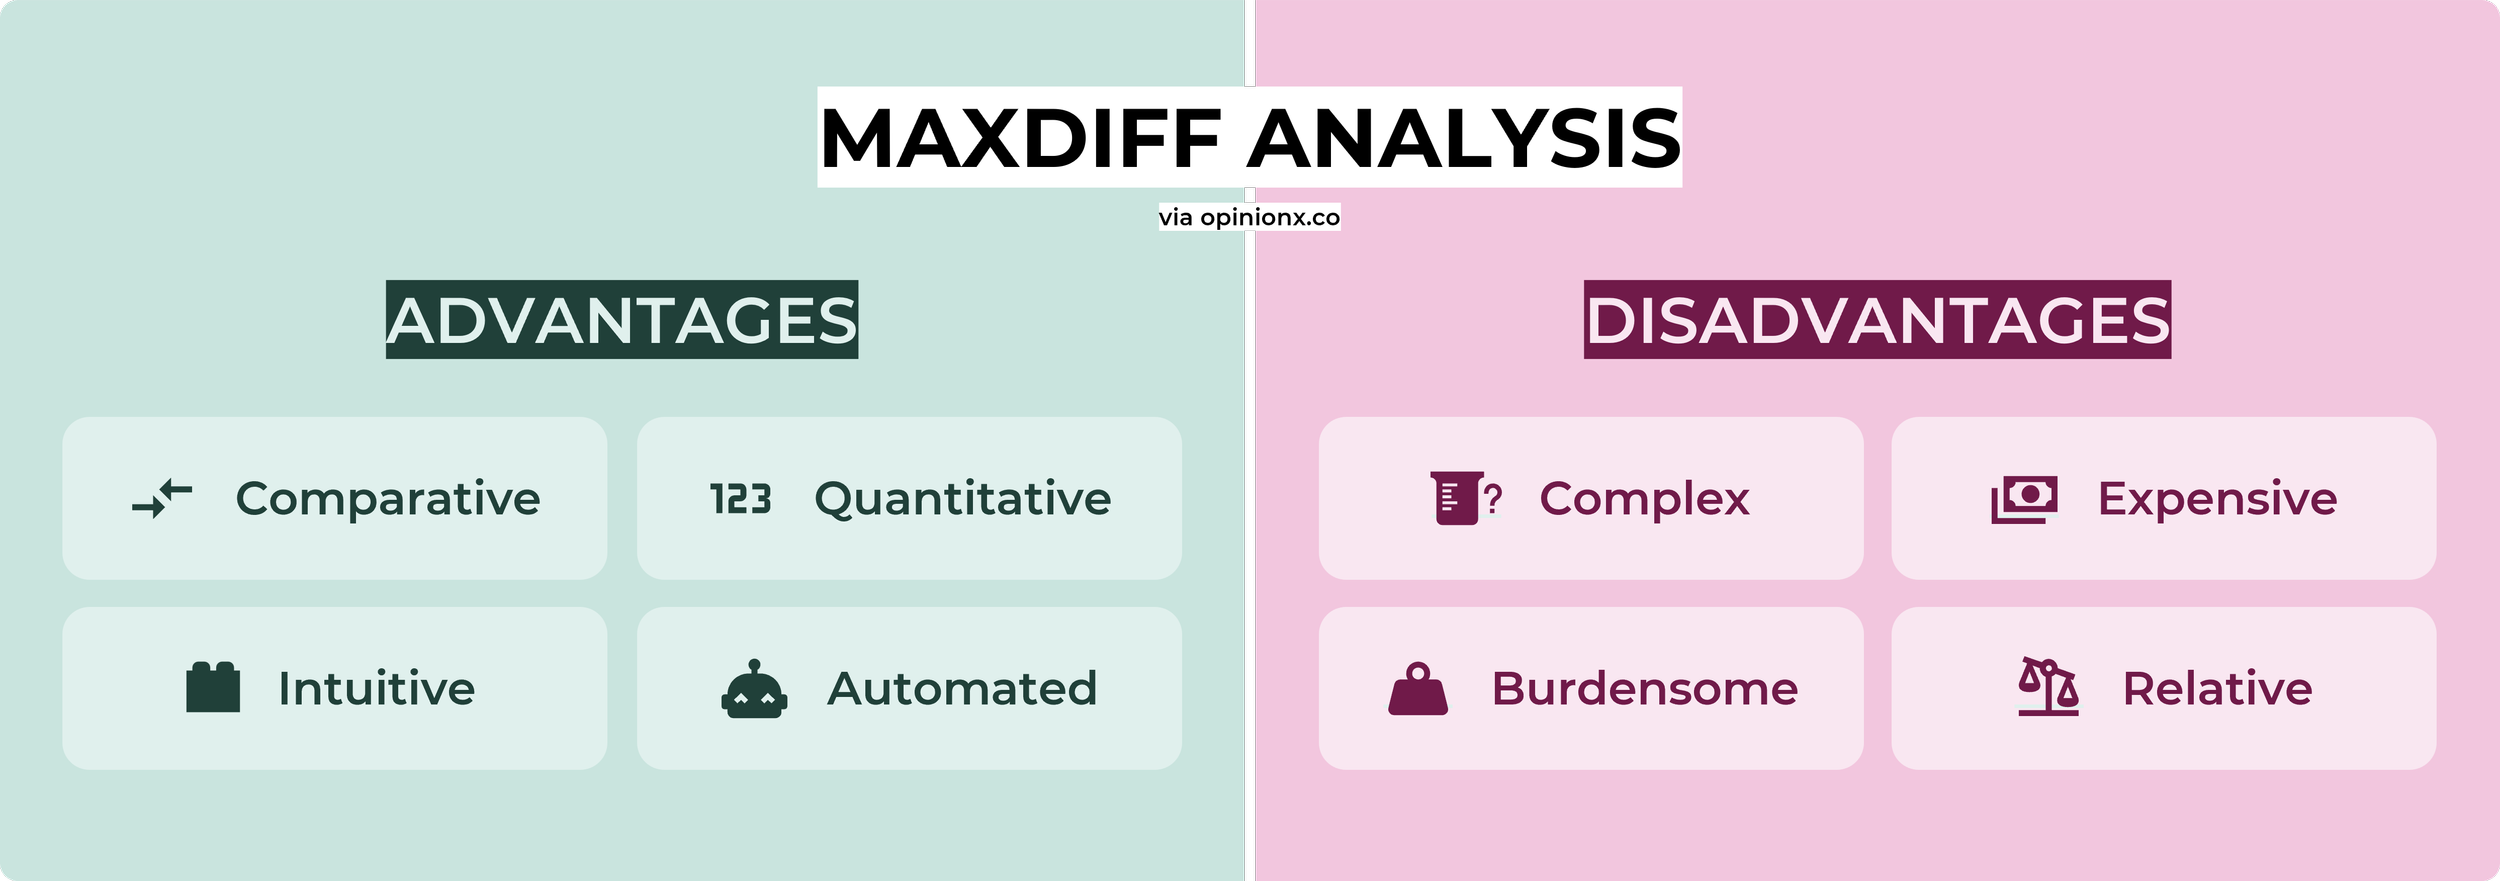 maxdiff analysis market research